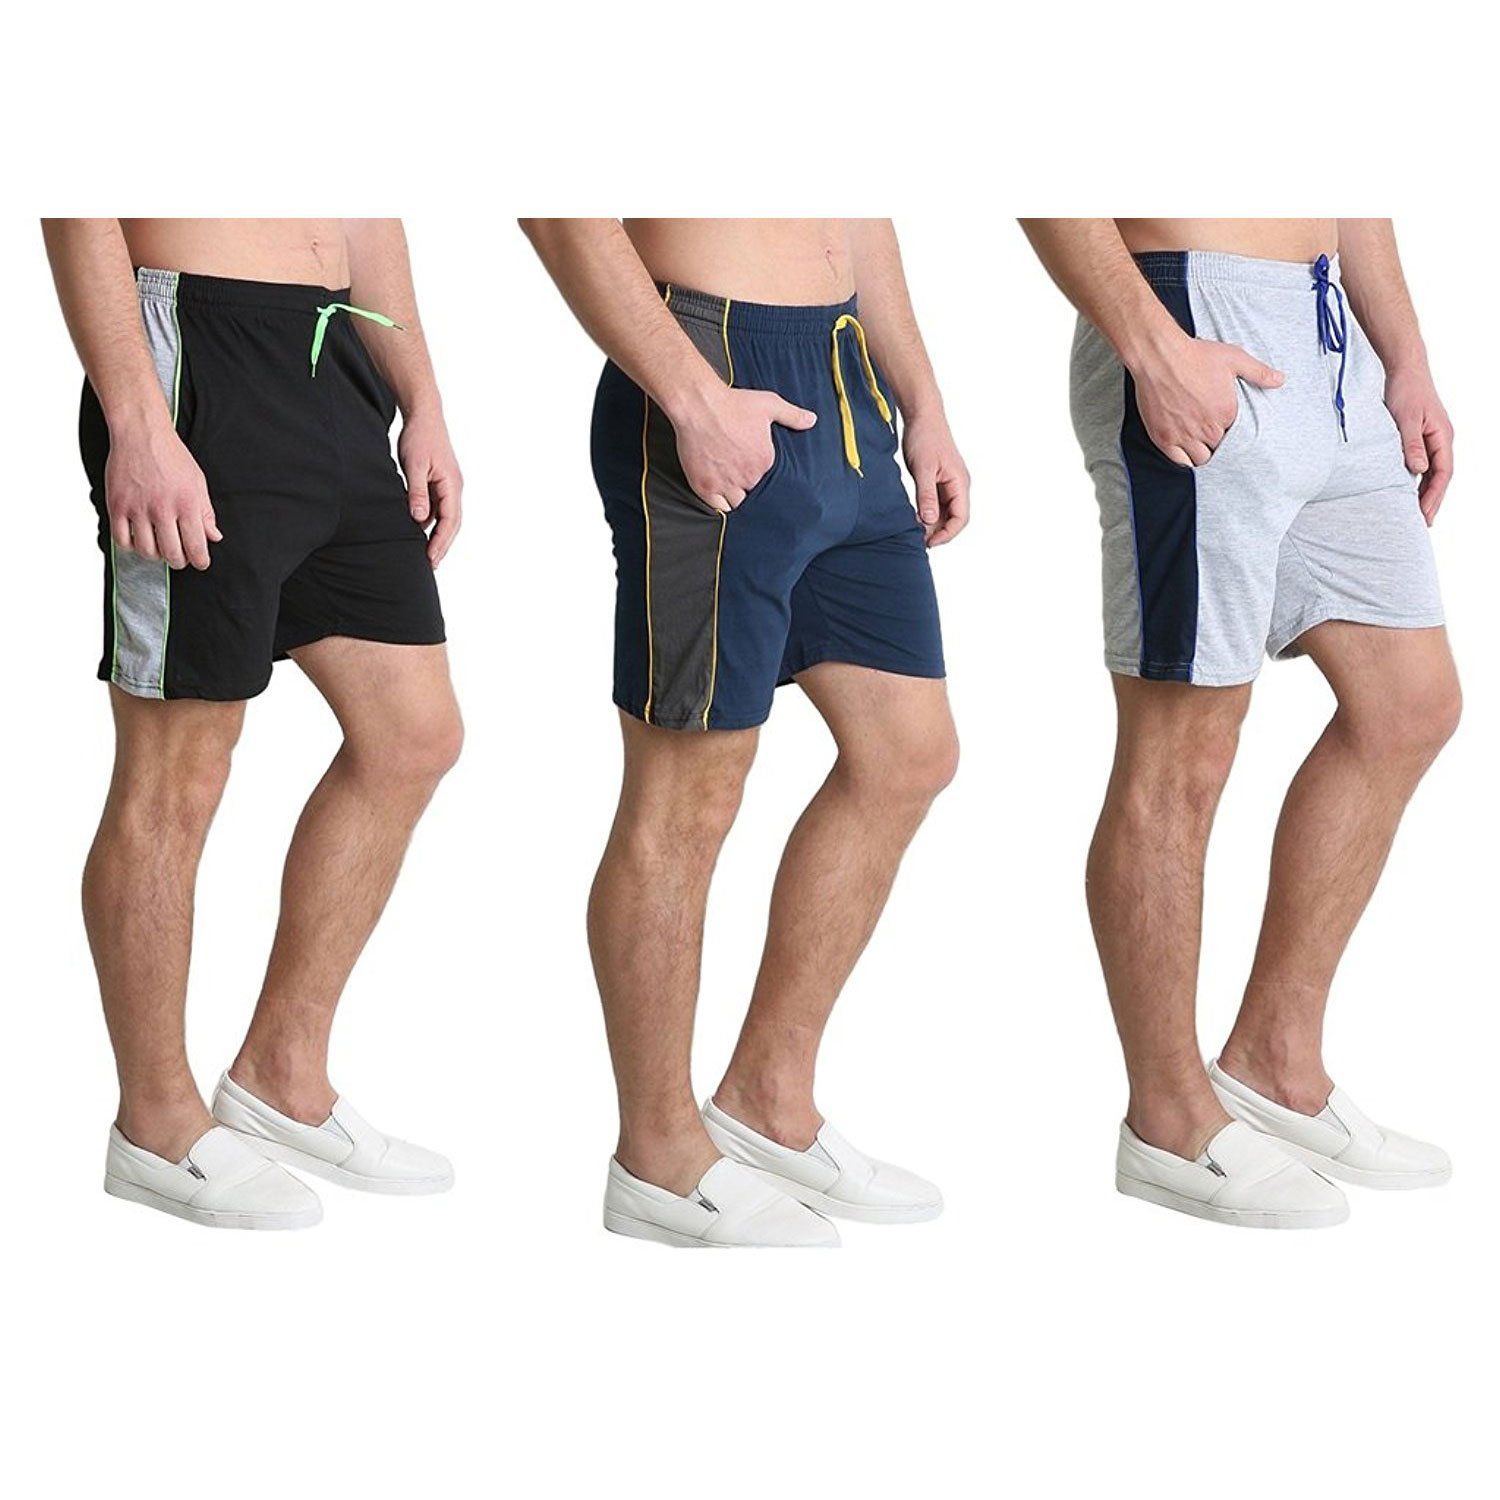  Zacharias Men's Shorts Pack of 3